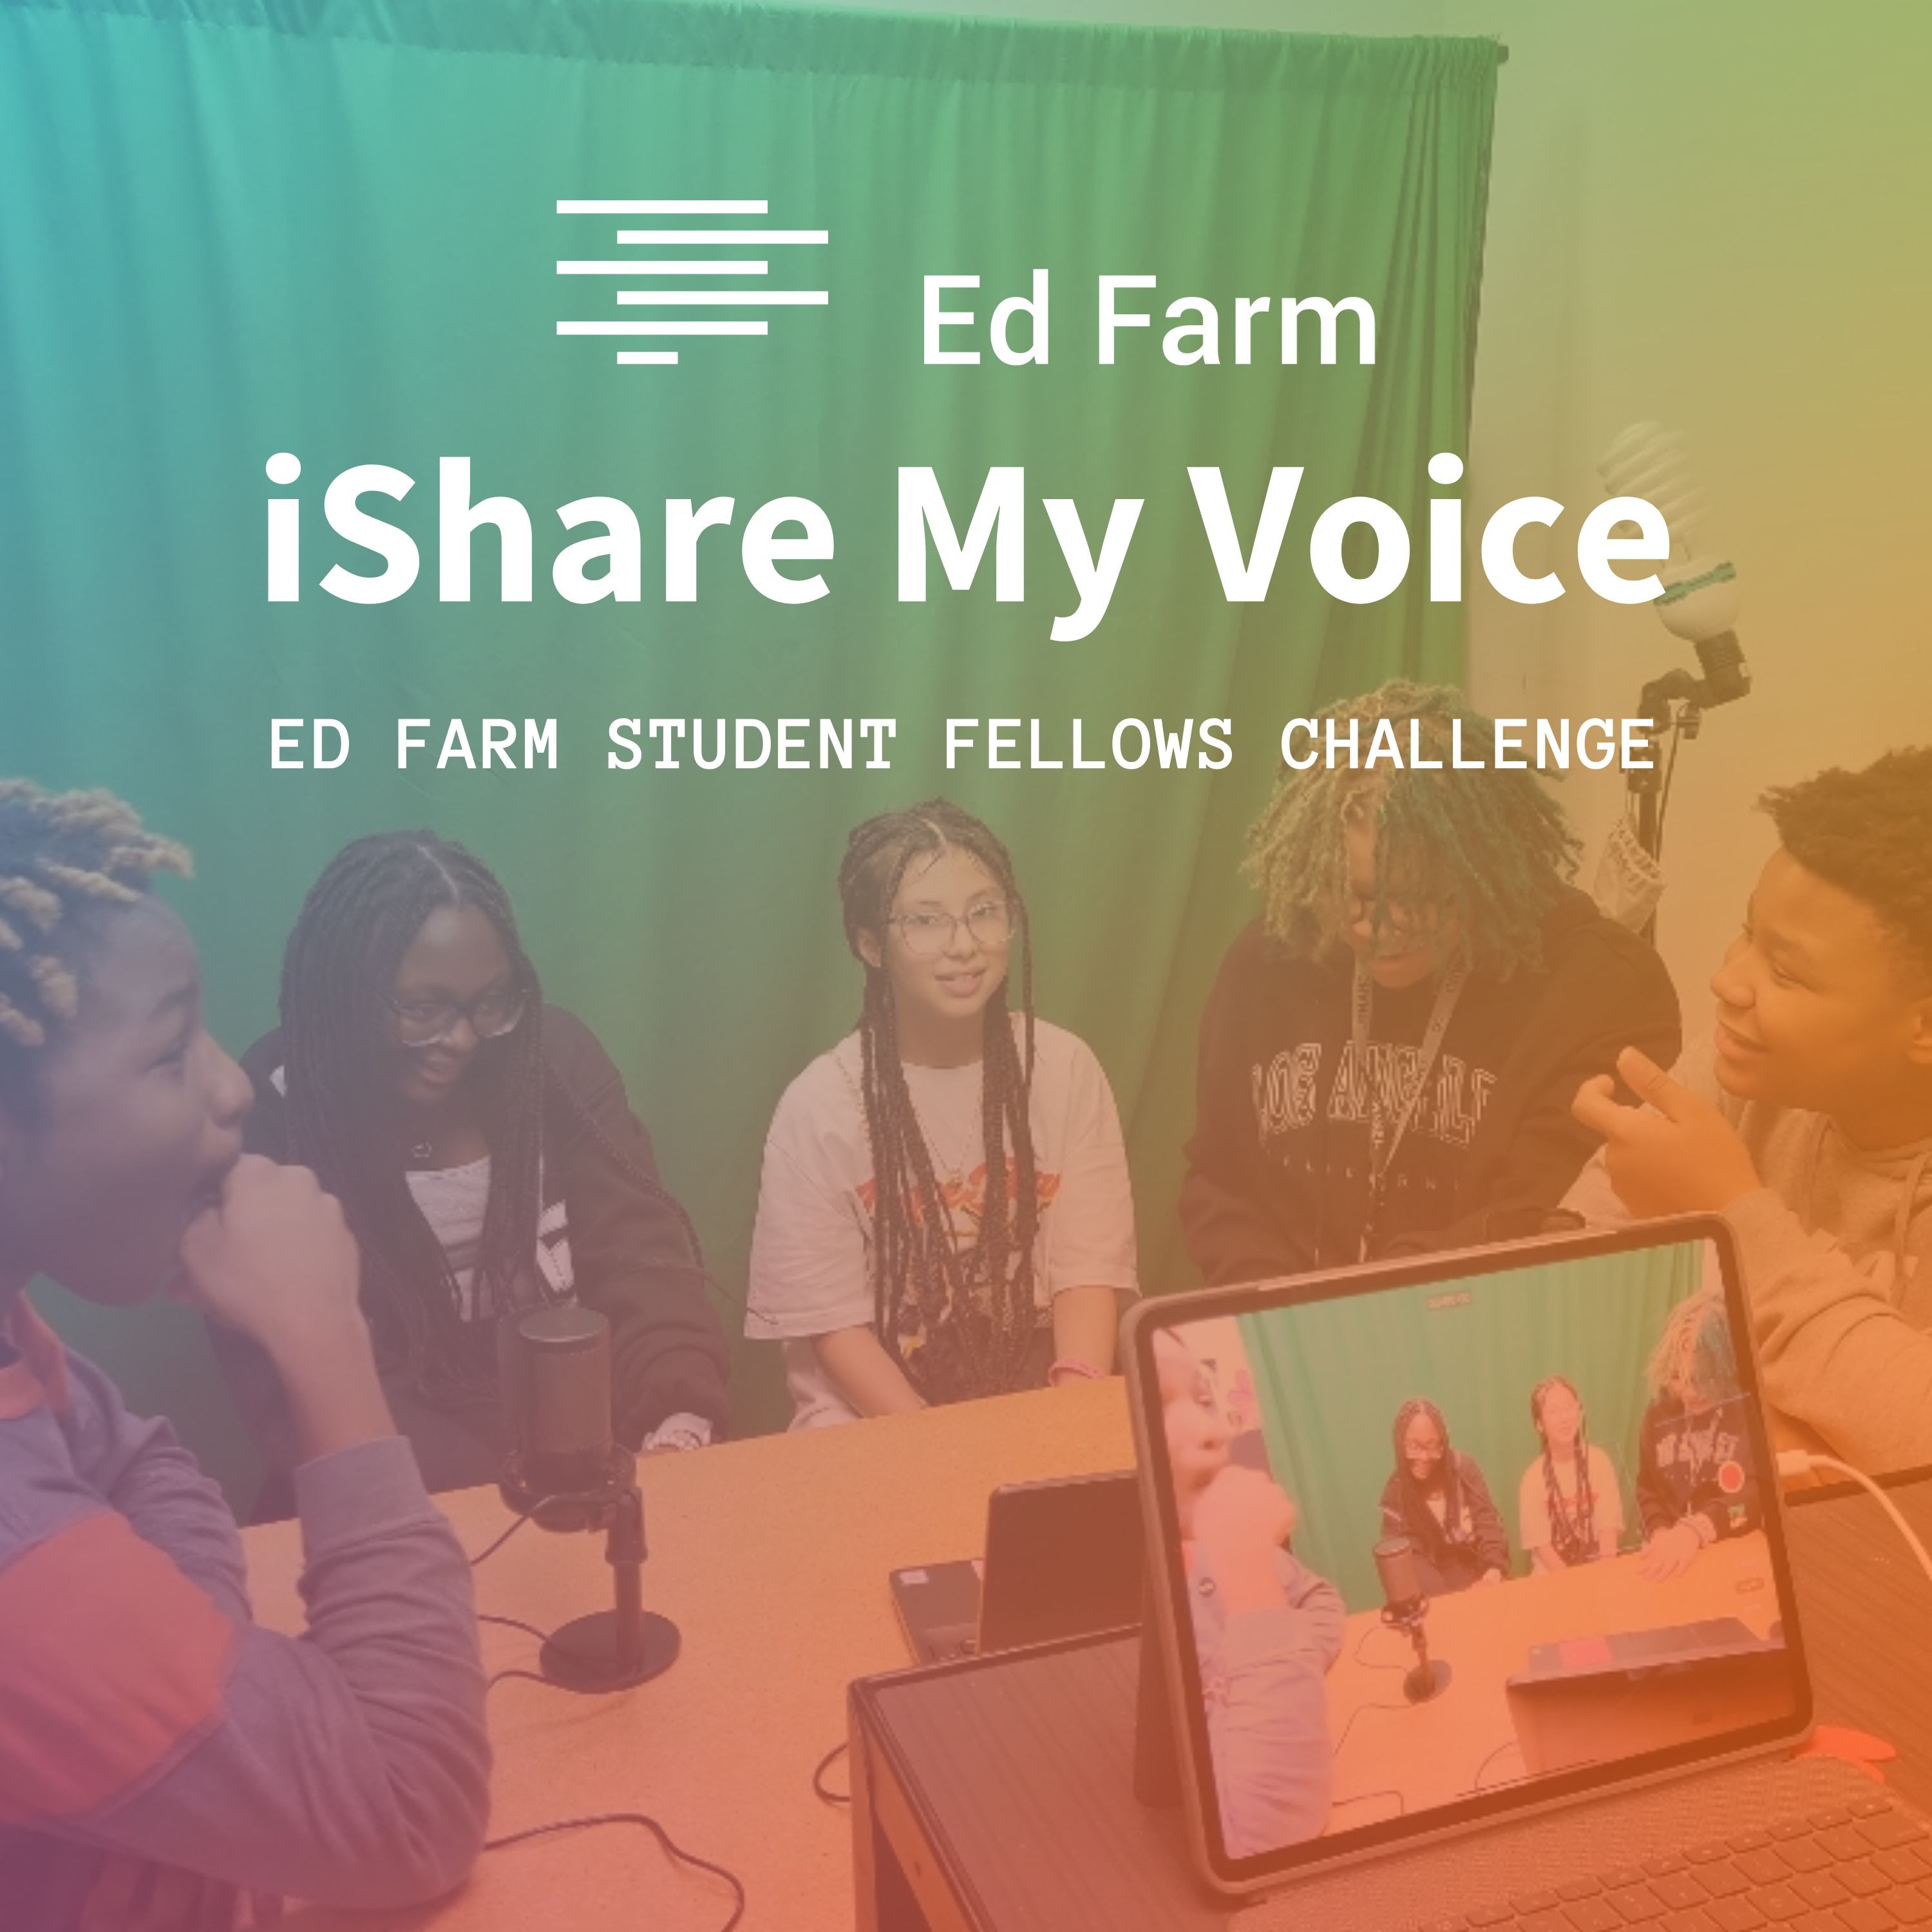 iShare My Voice Challenge - Ed Farm Student Fellows